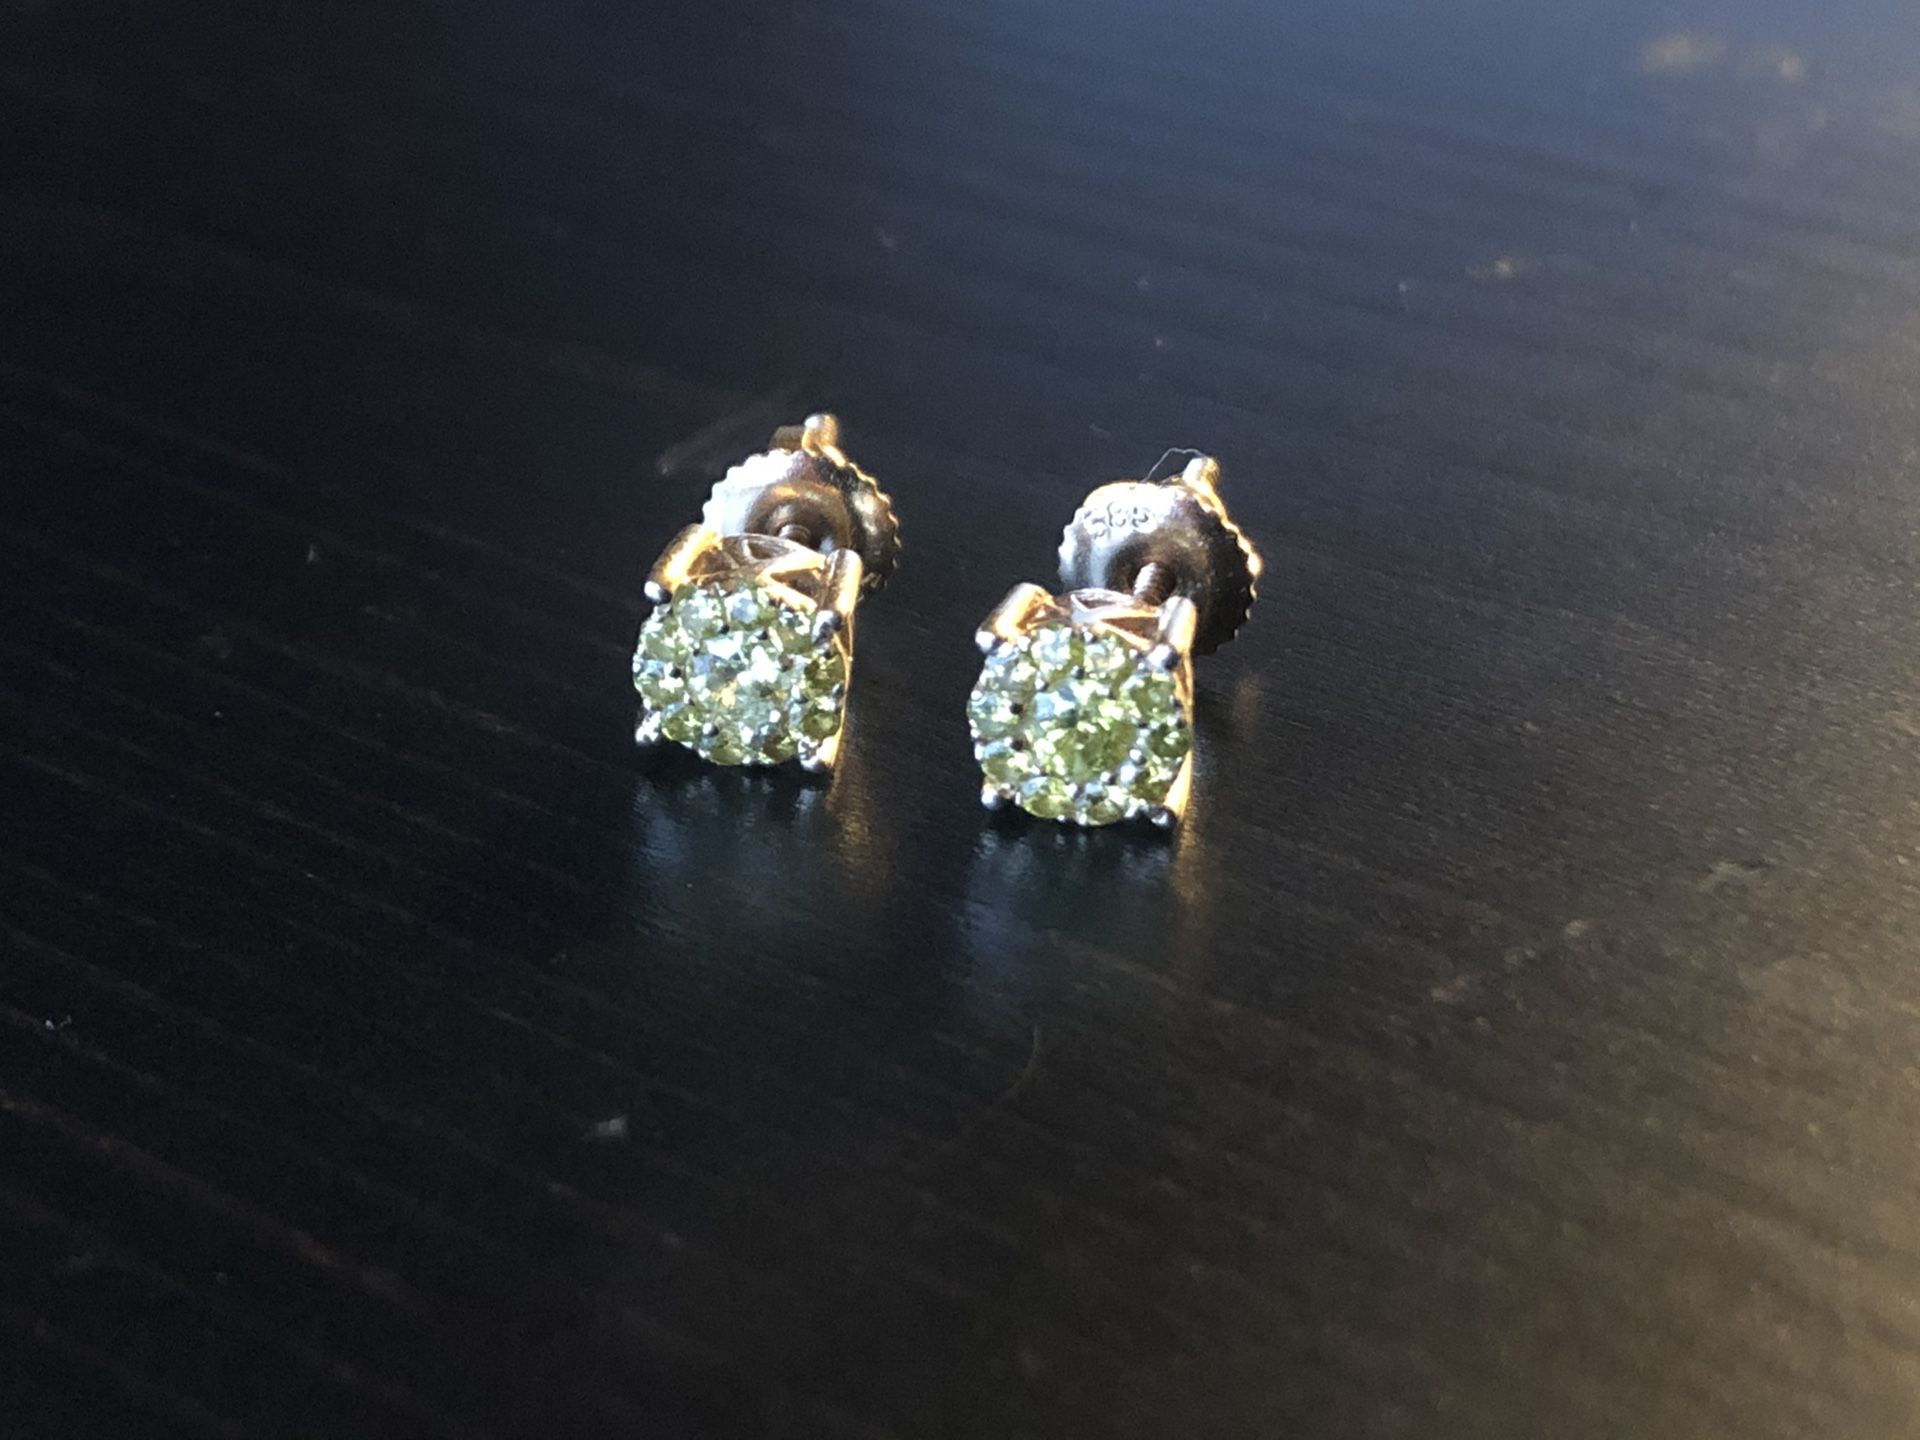 0.5 Ct Yellow Diamond Earrings with 14k Gold - REAL DIAMONDS!